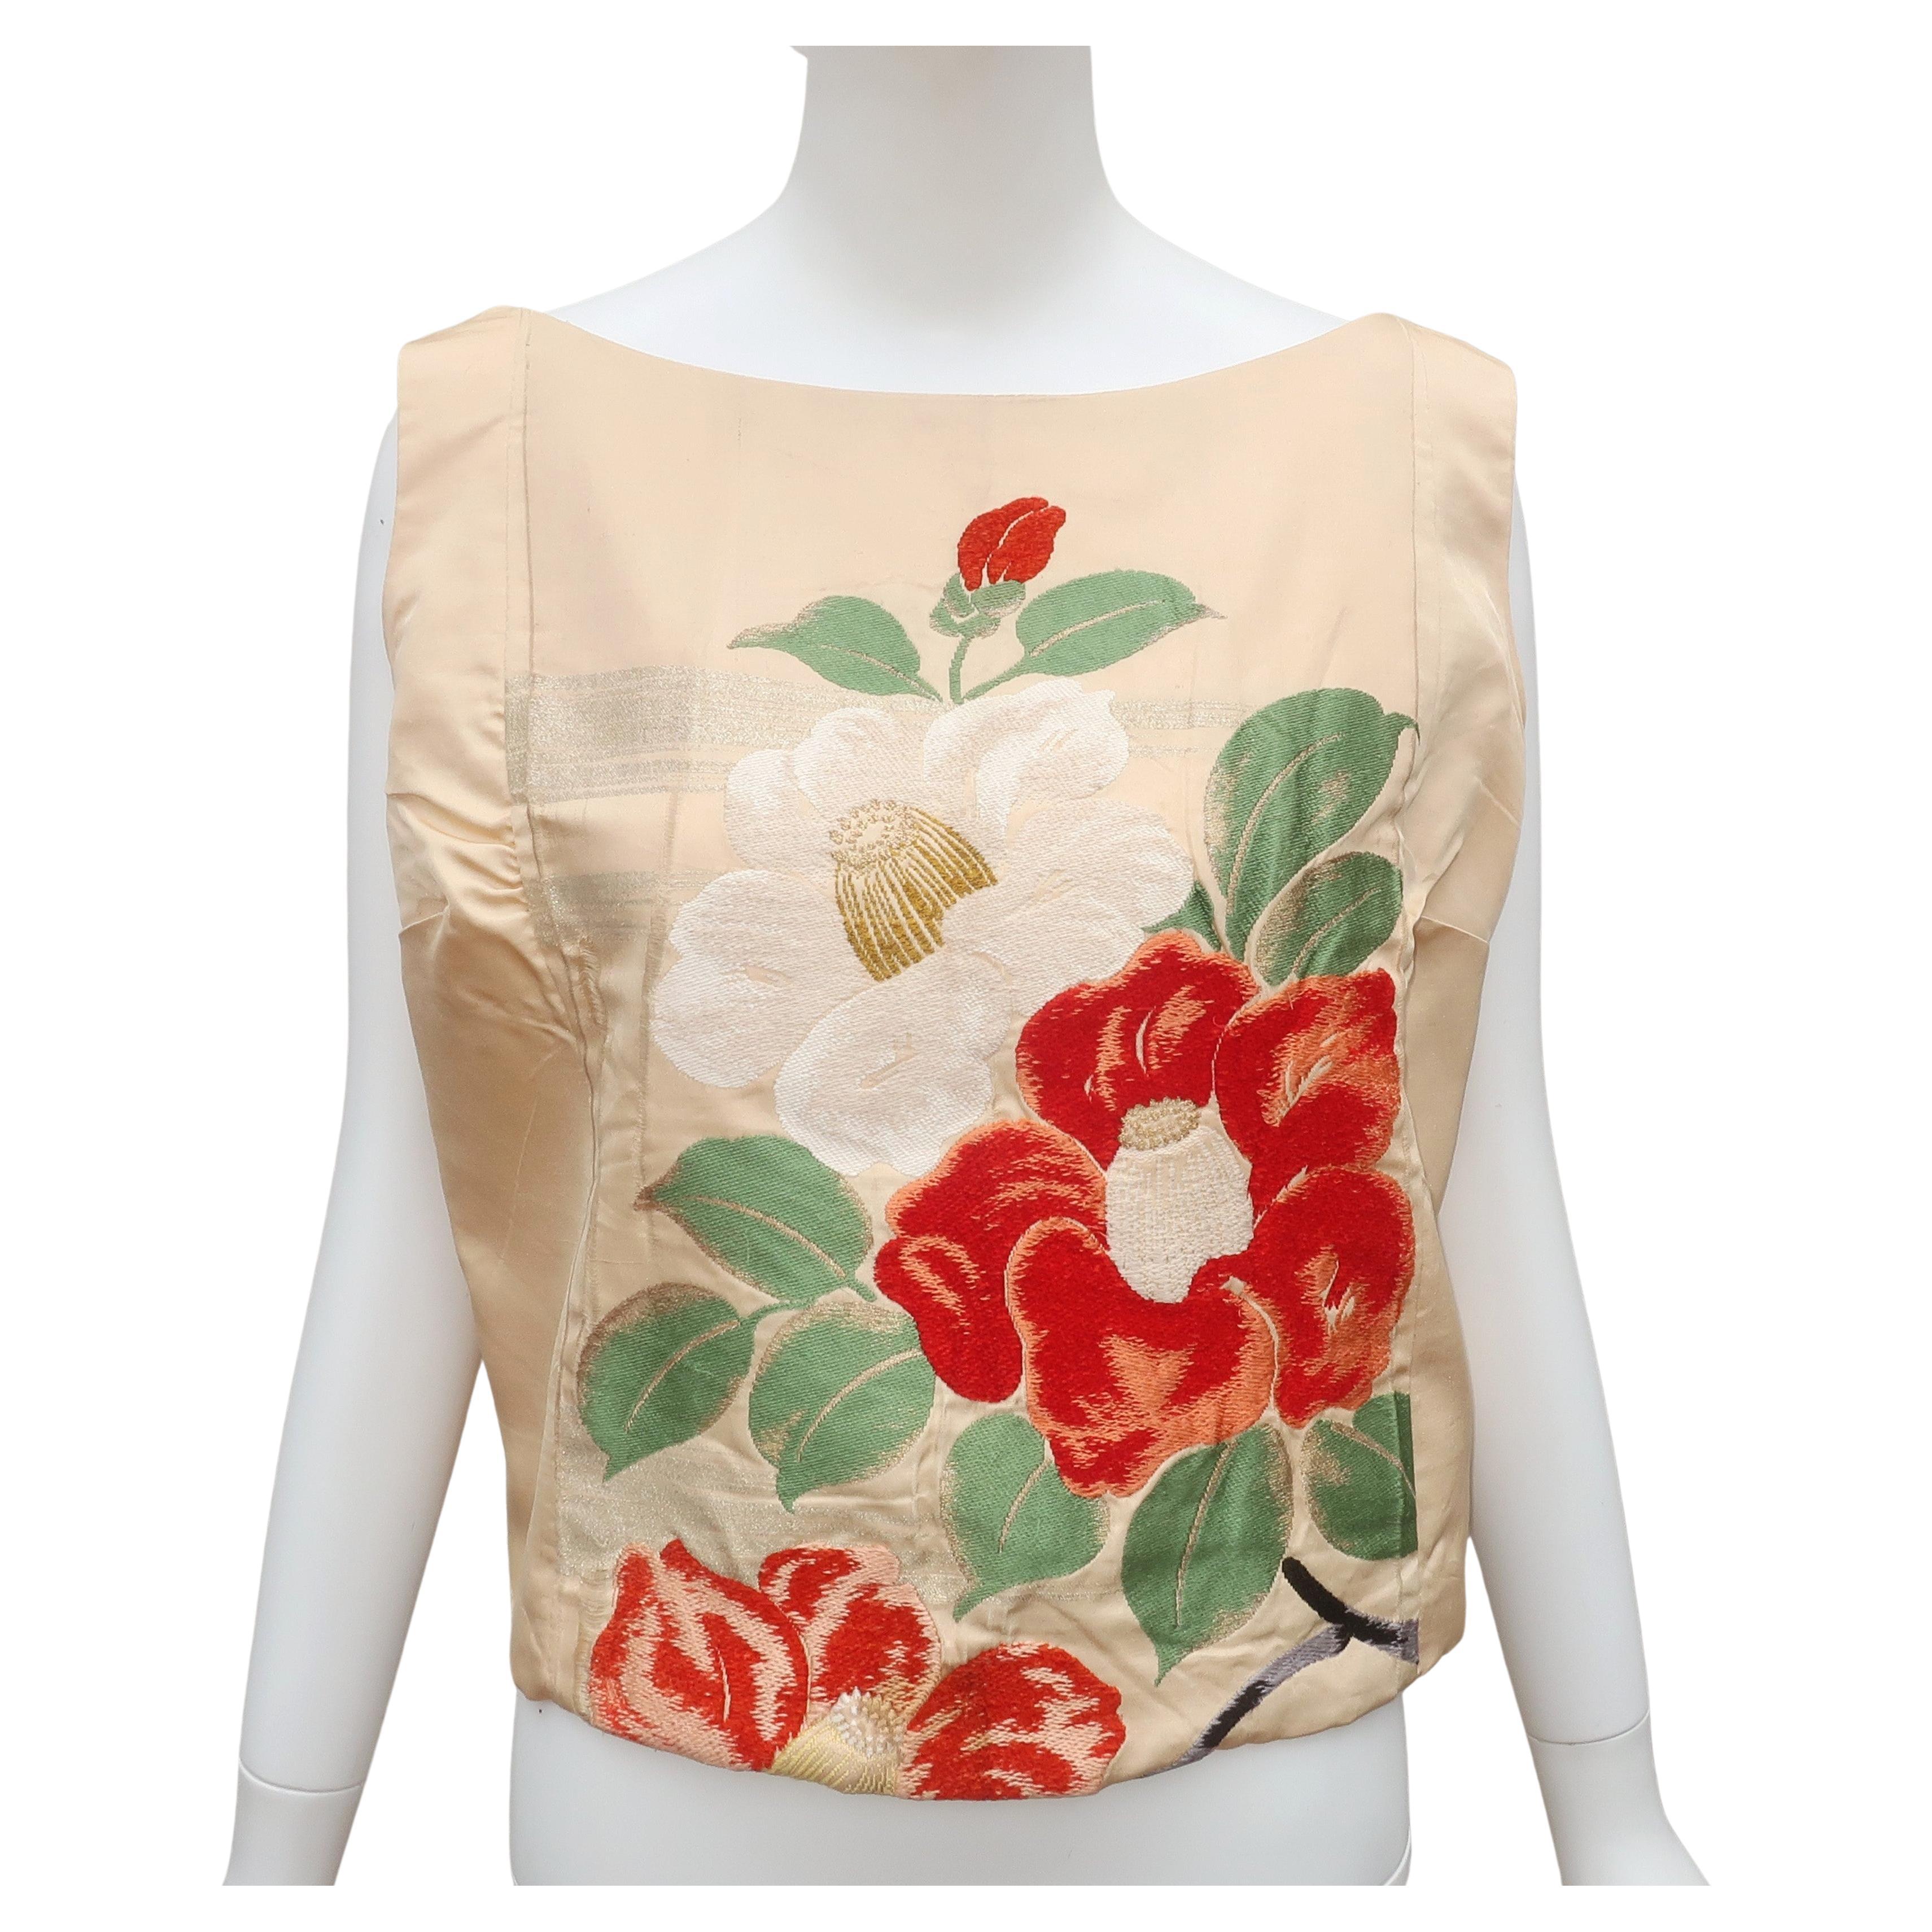 Custom Obi Creme Top With Floral Design, C.1950